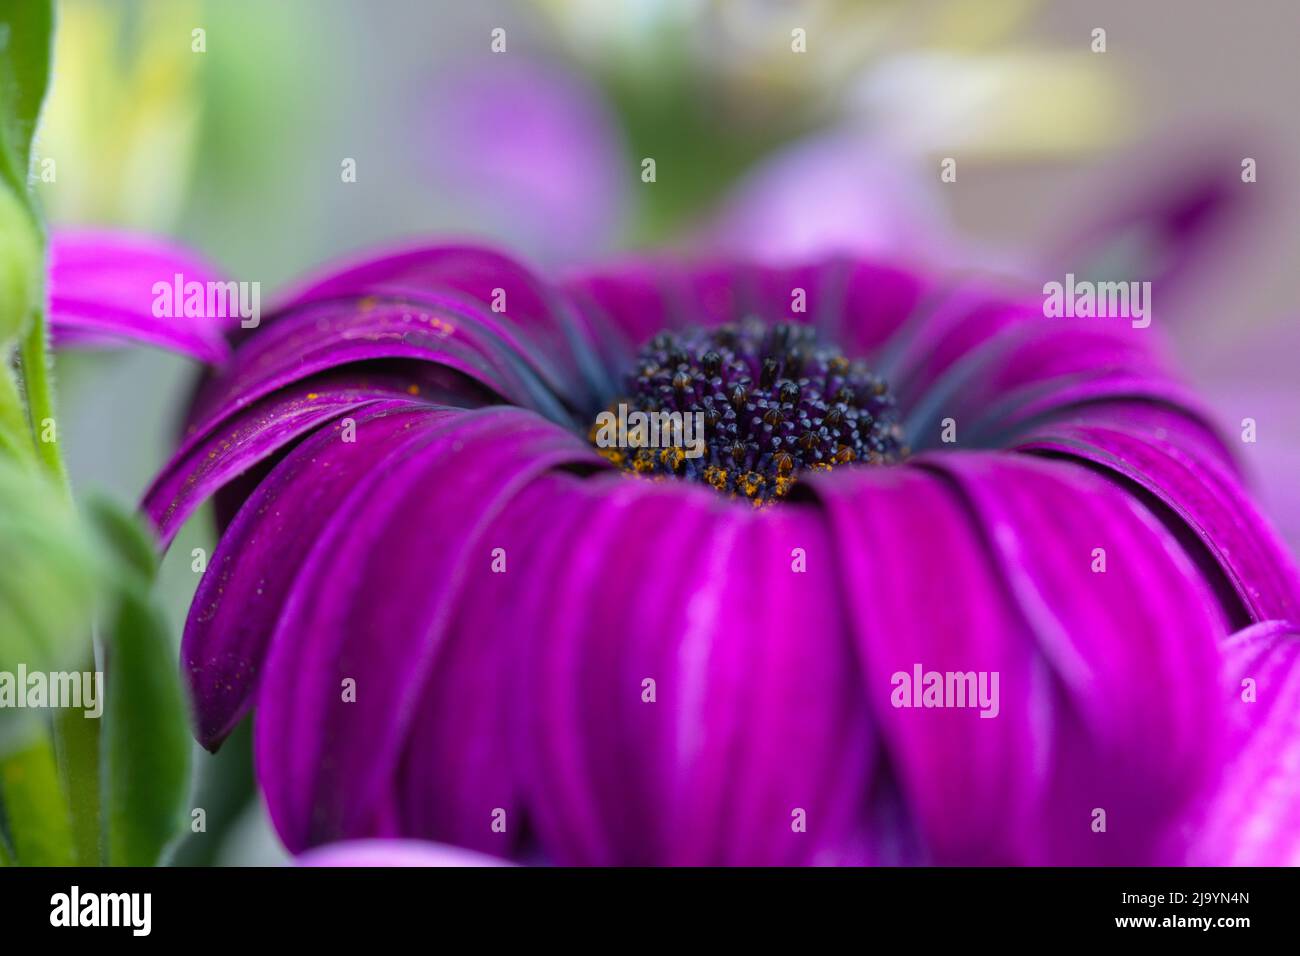 Macro photography of a purple garden flower Stock Photo